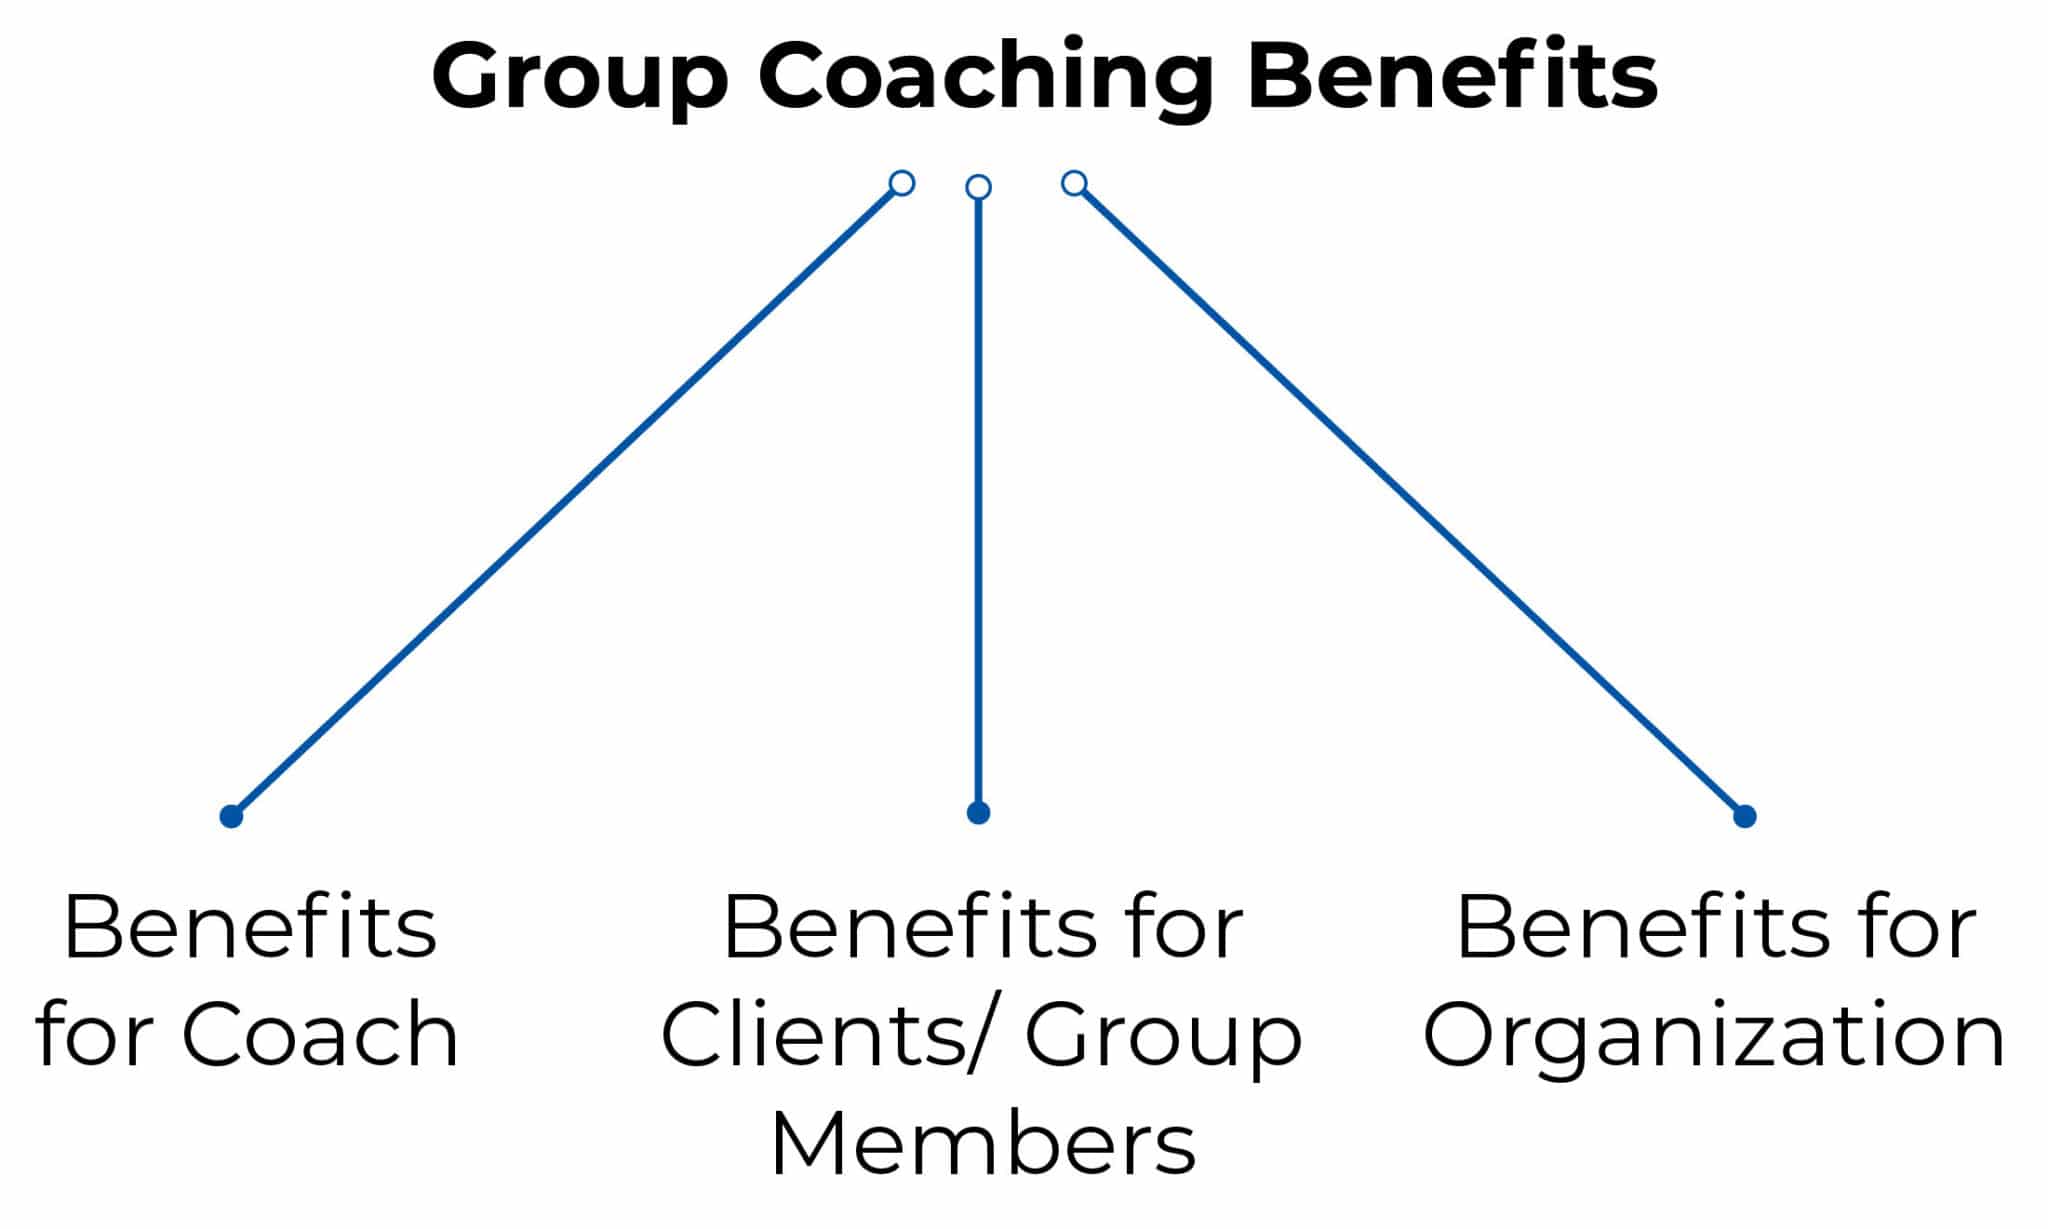 GROUP COACHING BENEFITS